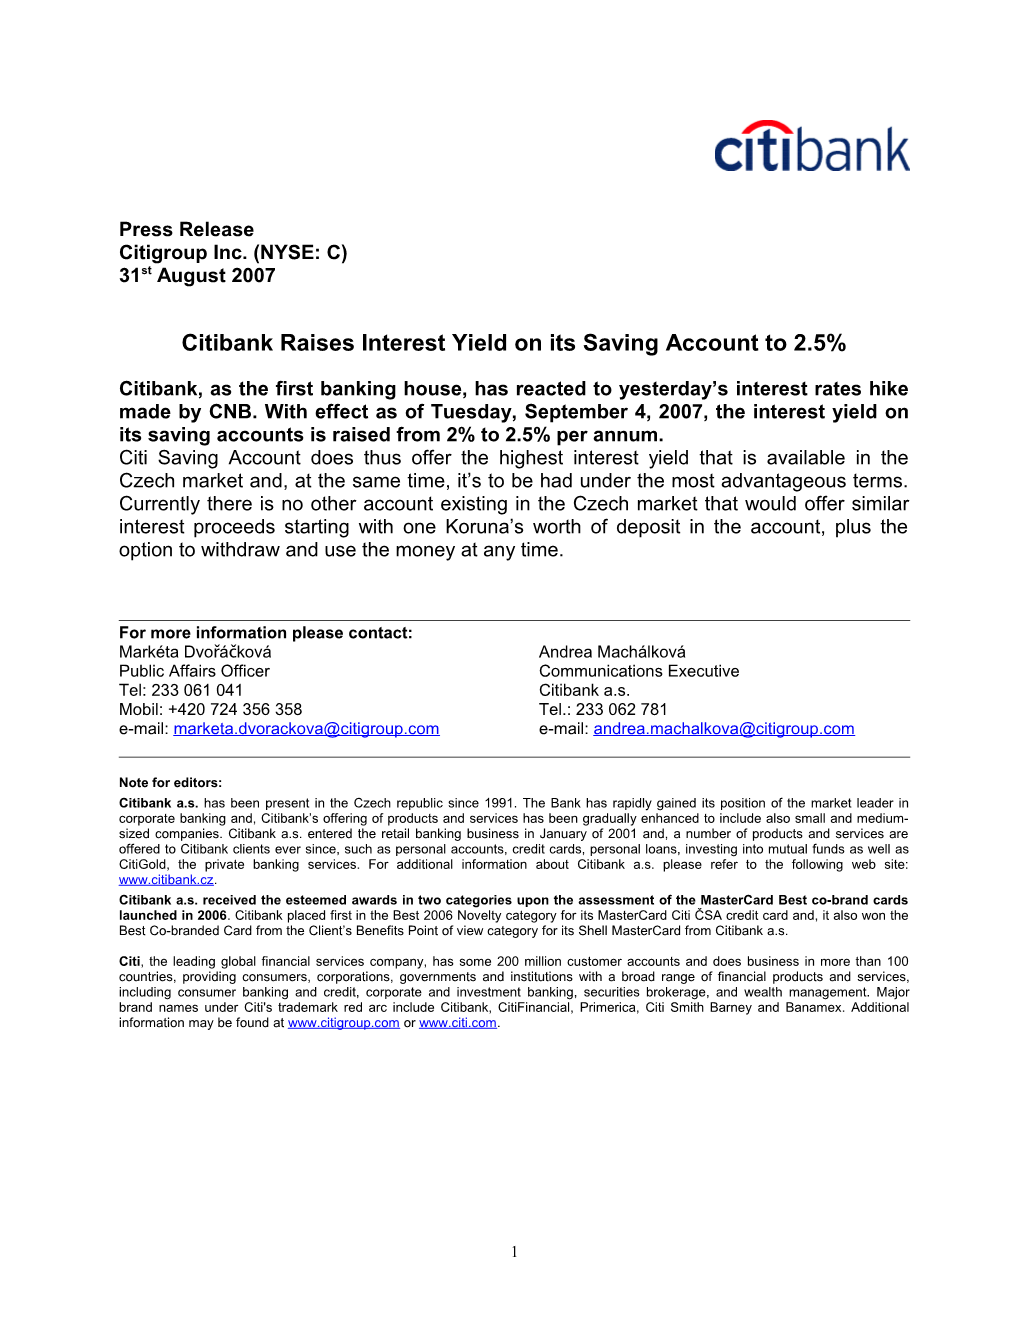 Citibank Raises Interest Yield on Its Saving Account to 2.5%